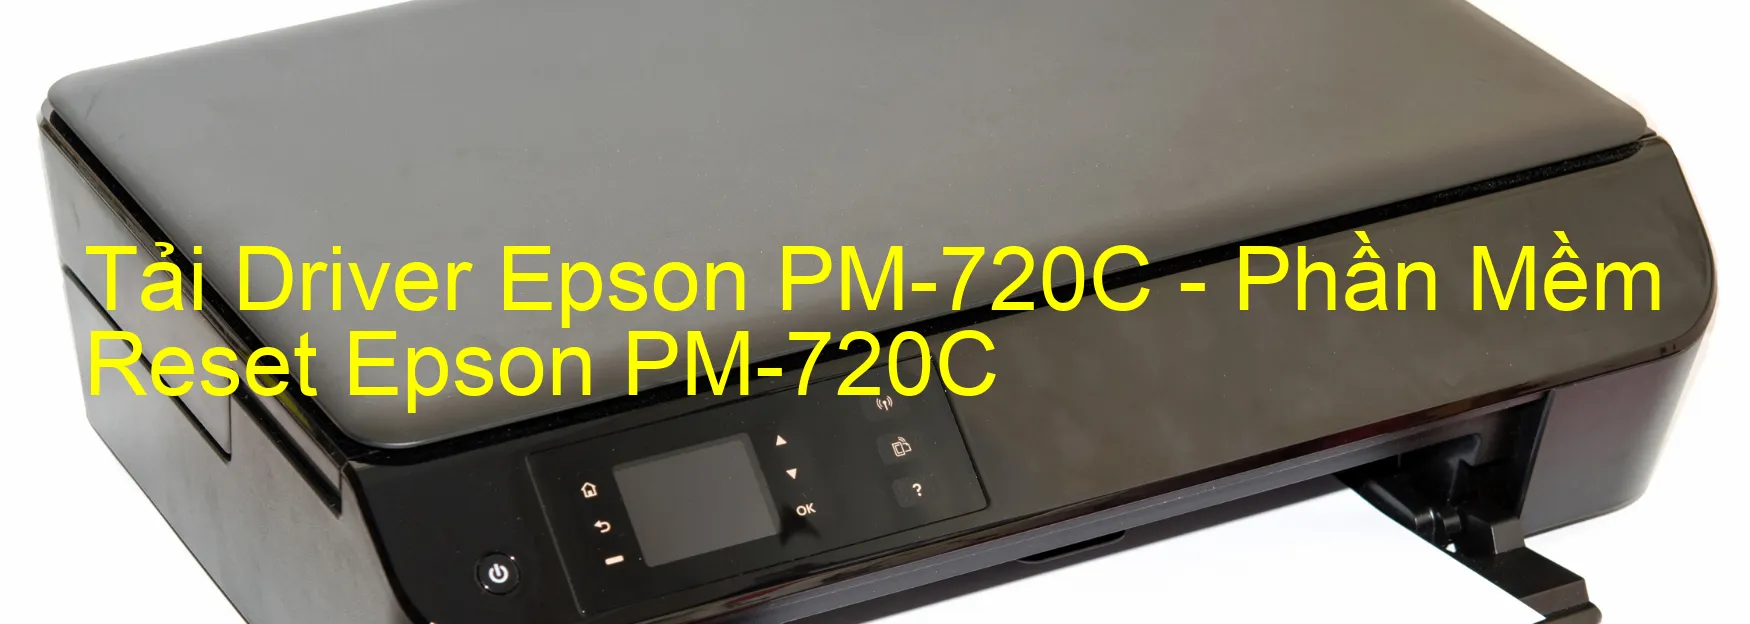 Driver Epson PM-720C, Phần Mềm Reset Epson PM-720C